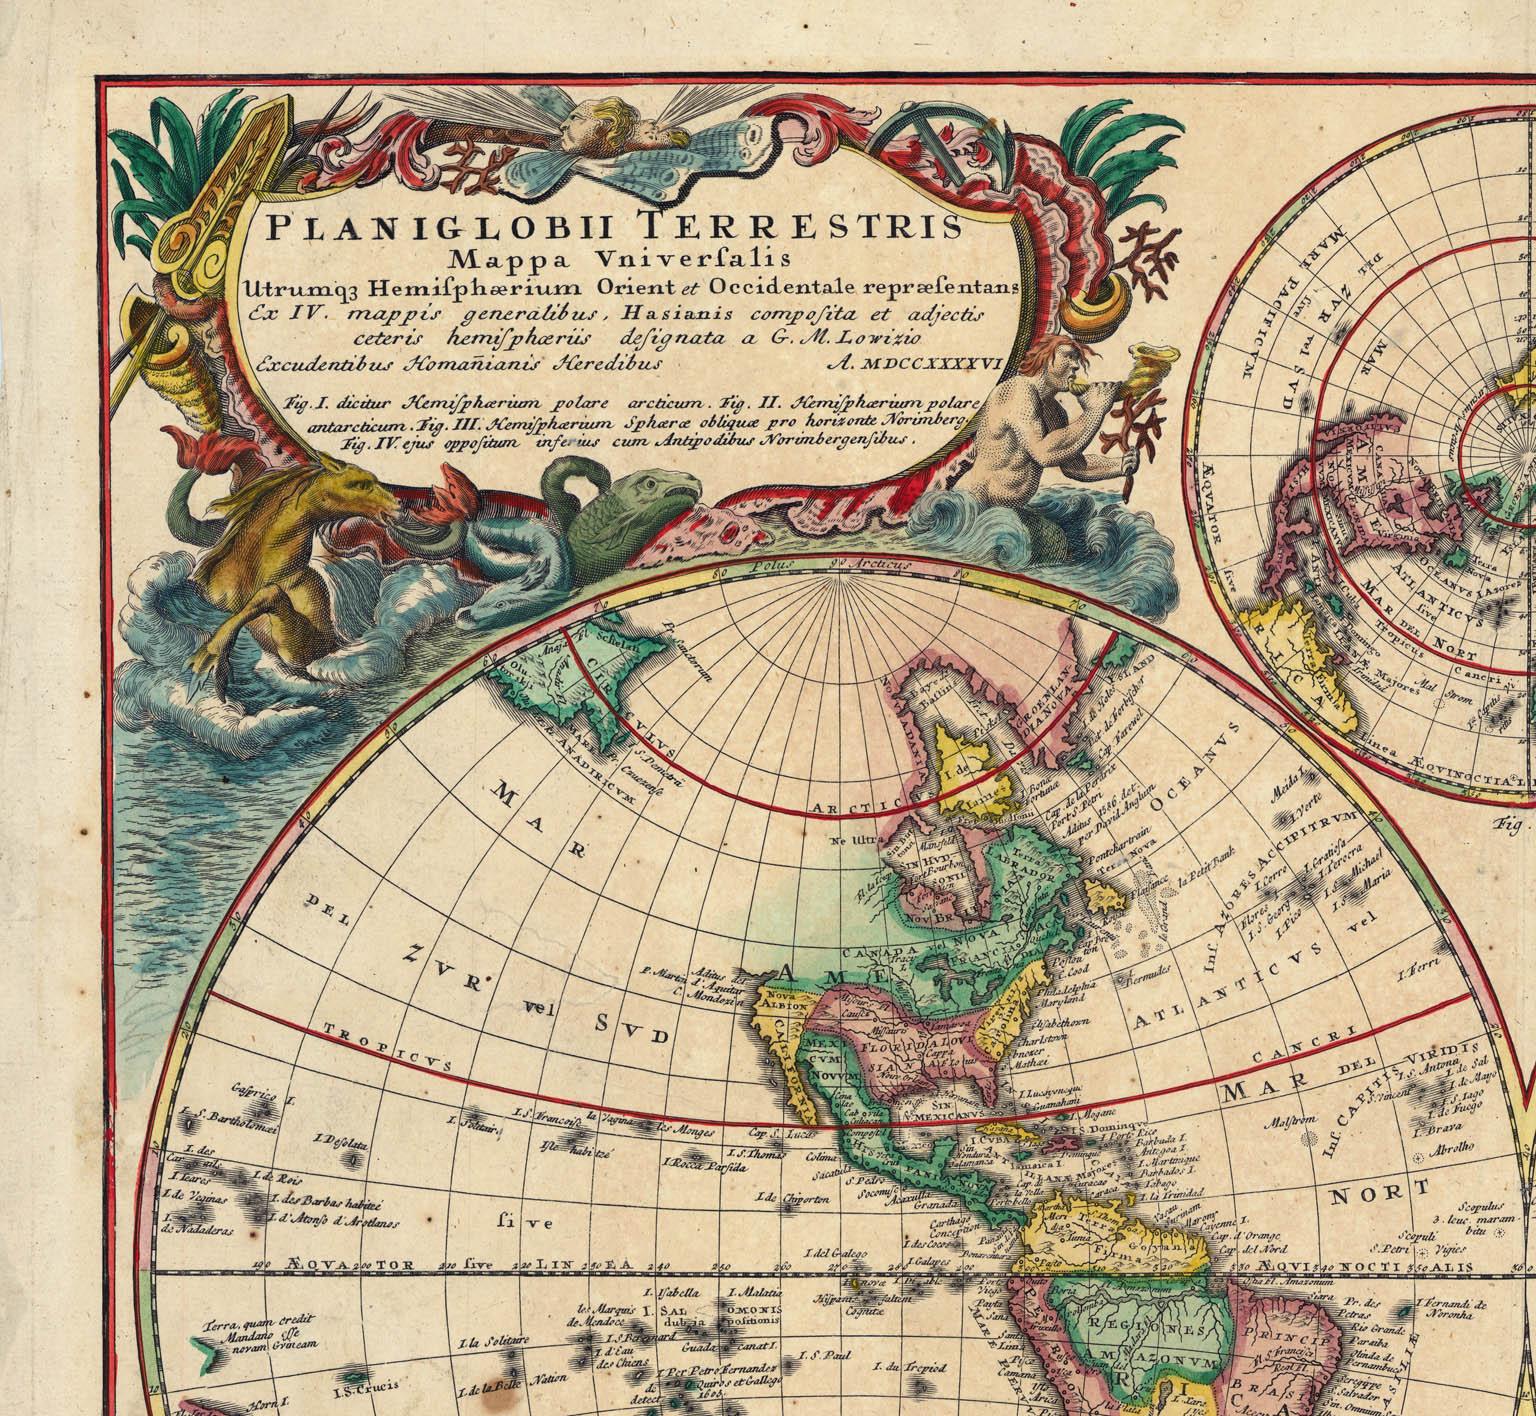 Planiglobii Terrestris Mappa Universalis / Mappe Monde - Print by Homann Heirs